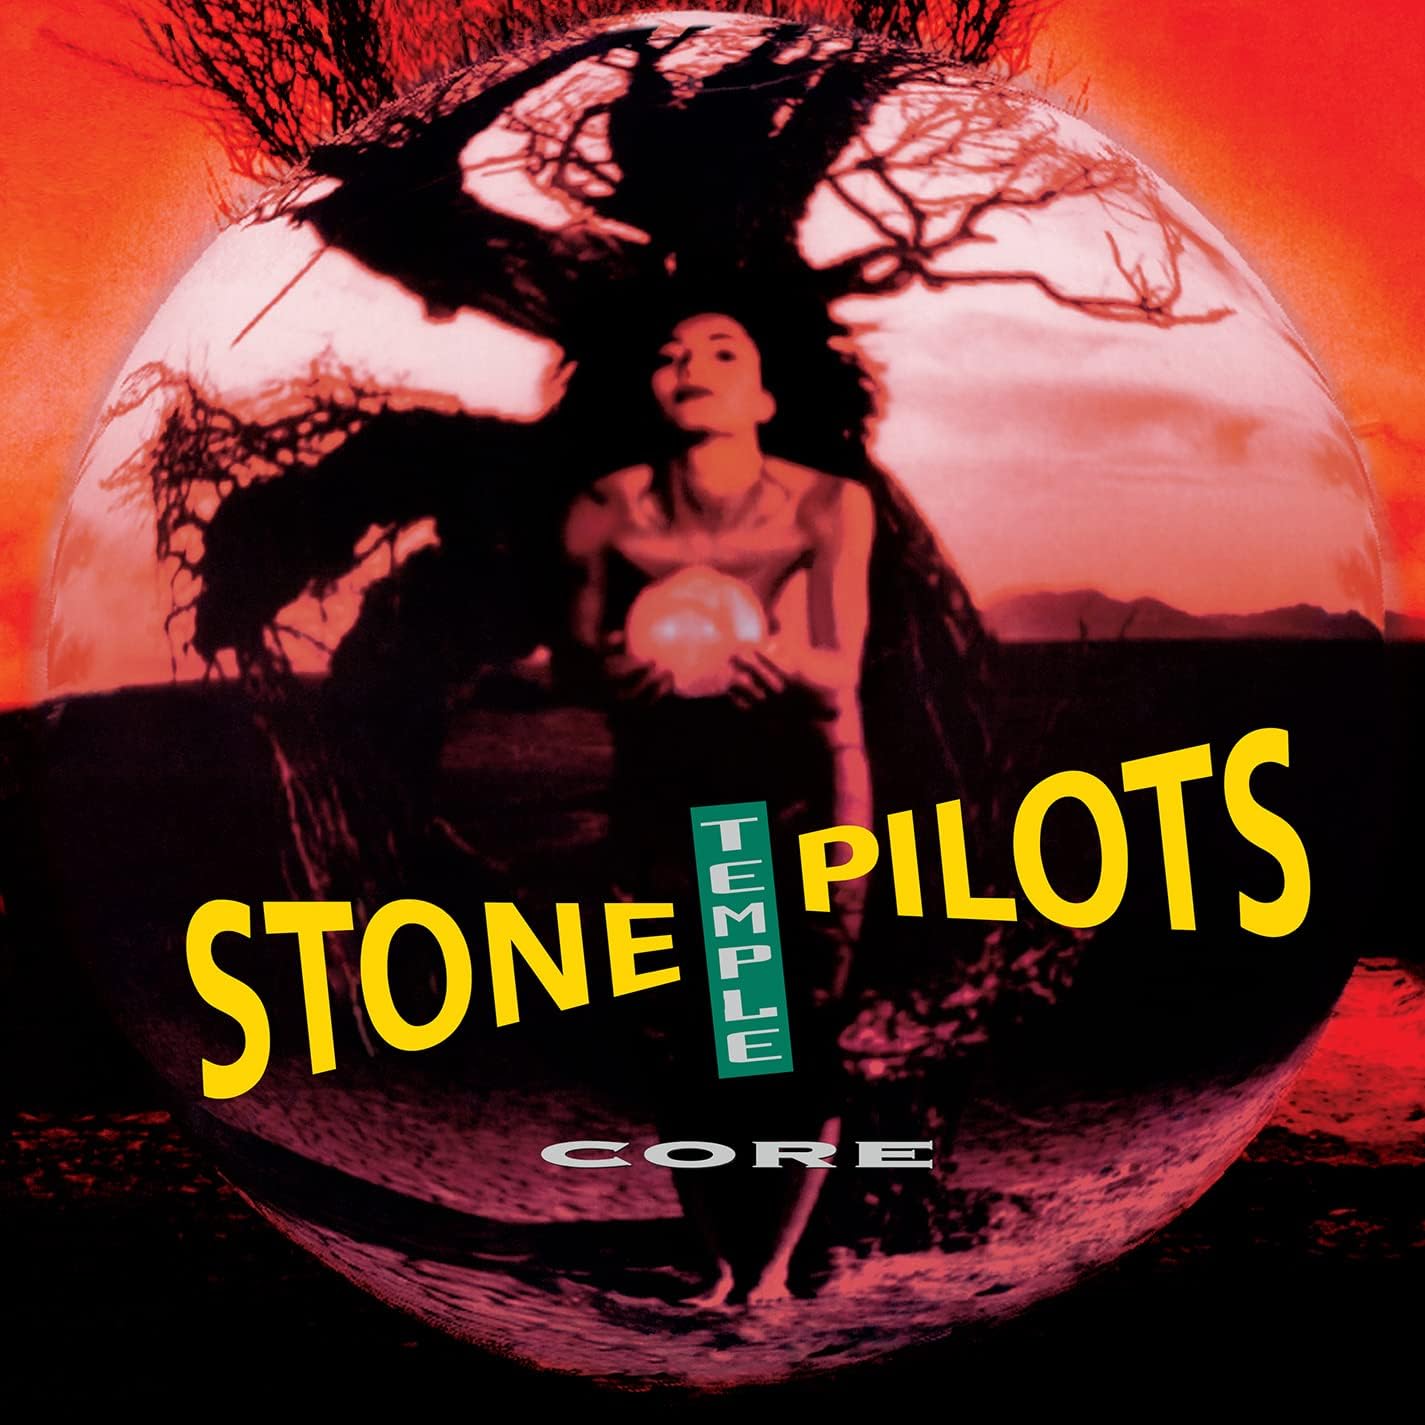 Stone Temple Pilots ƒ?? Core (2017, CD)